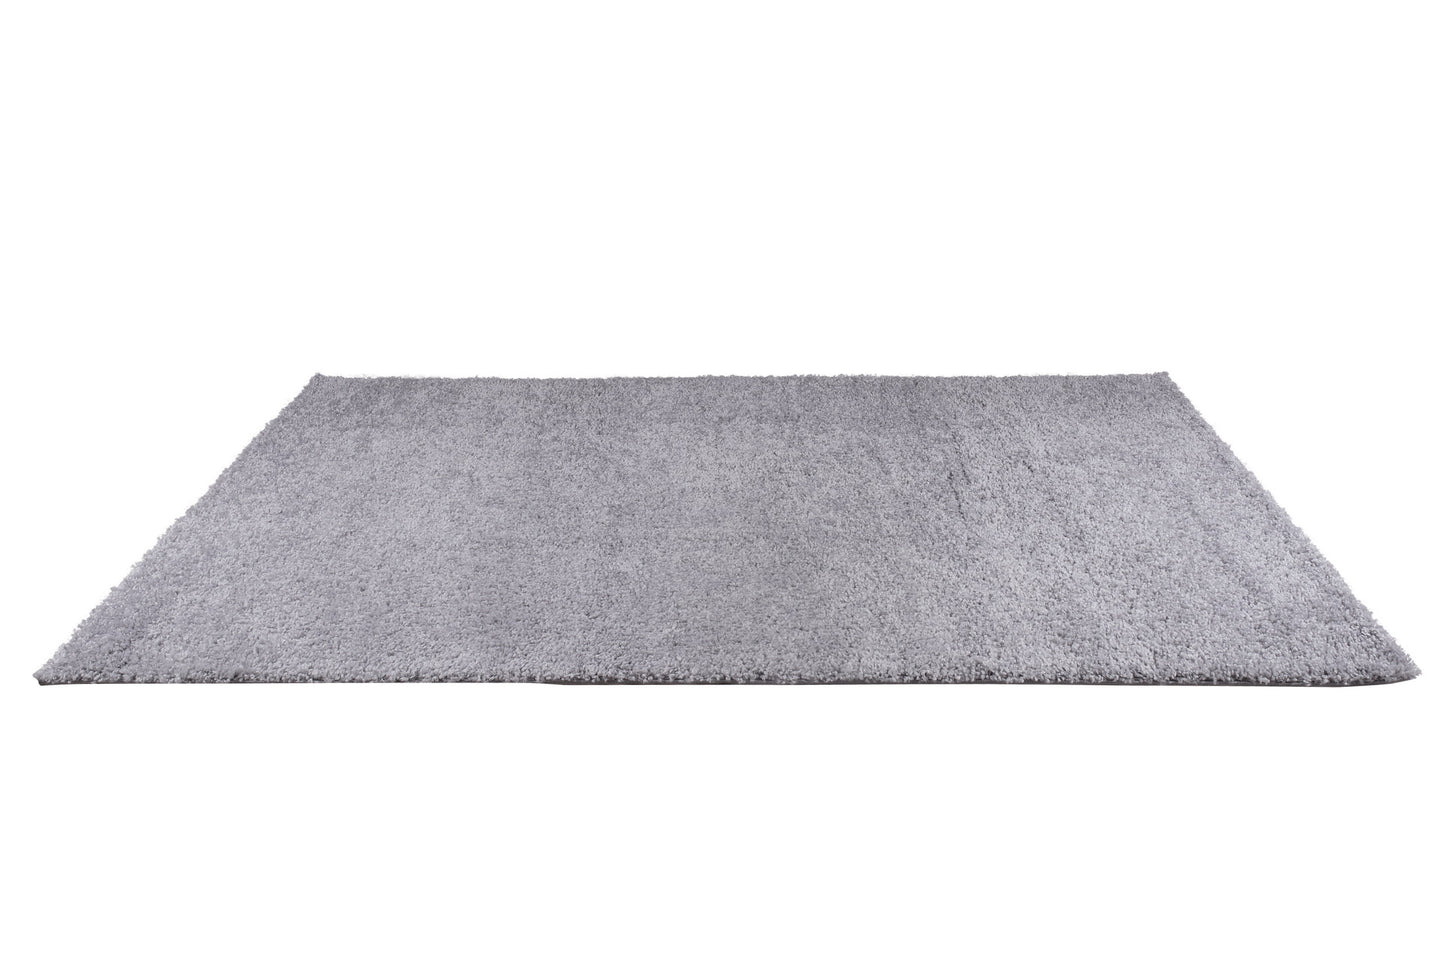 ladole rugs solid color shaggy meknes durable beautiful turkish indoor small mat doormat rug in light gray 110 x 211 57cm x 90cm 8x10, 8x11 ft Large Living Room Carpet, Bedroom, Kitchen